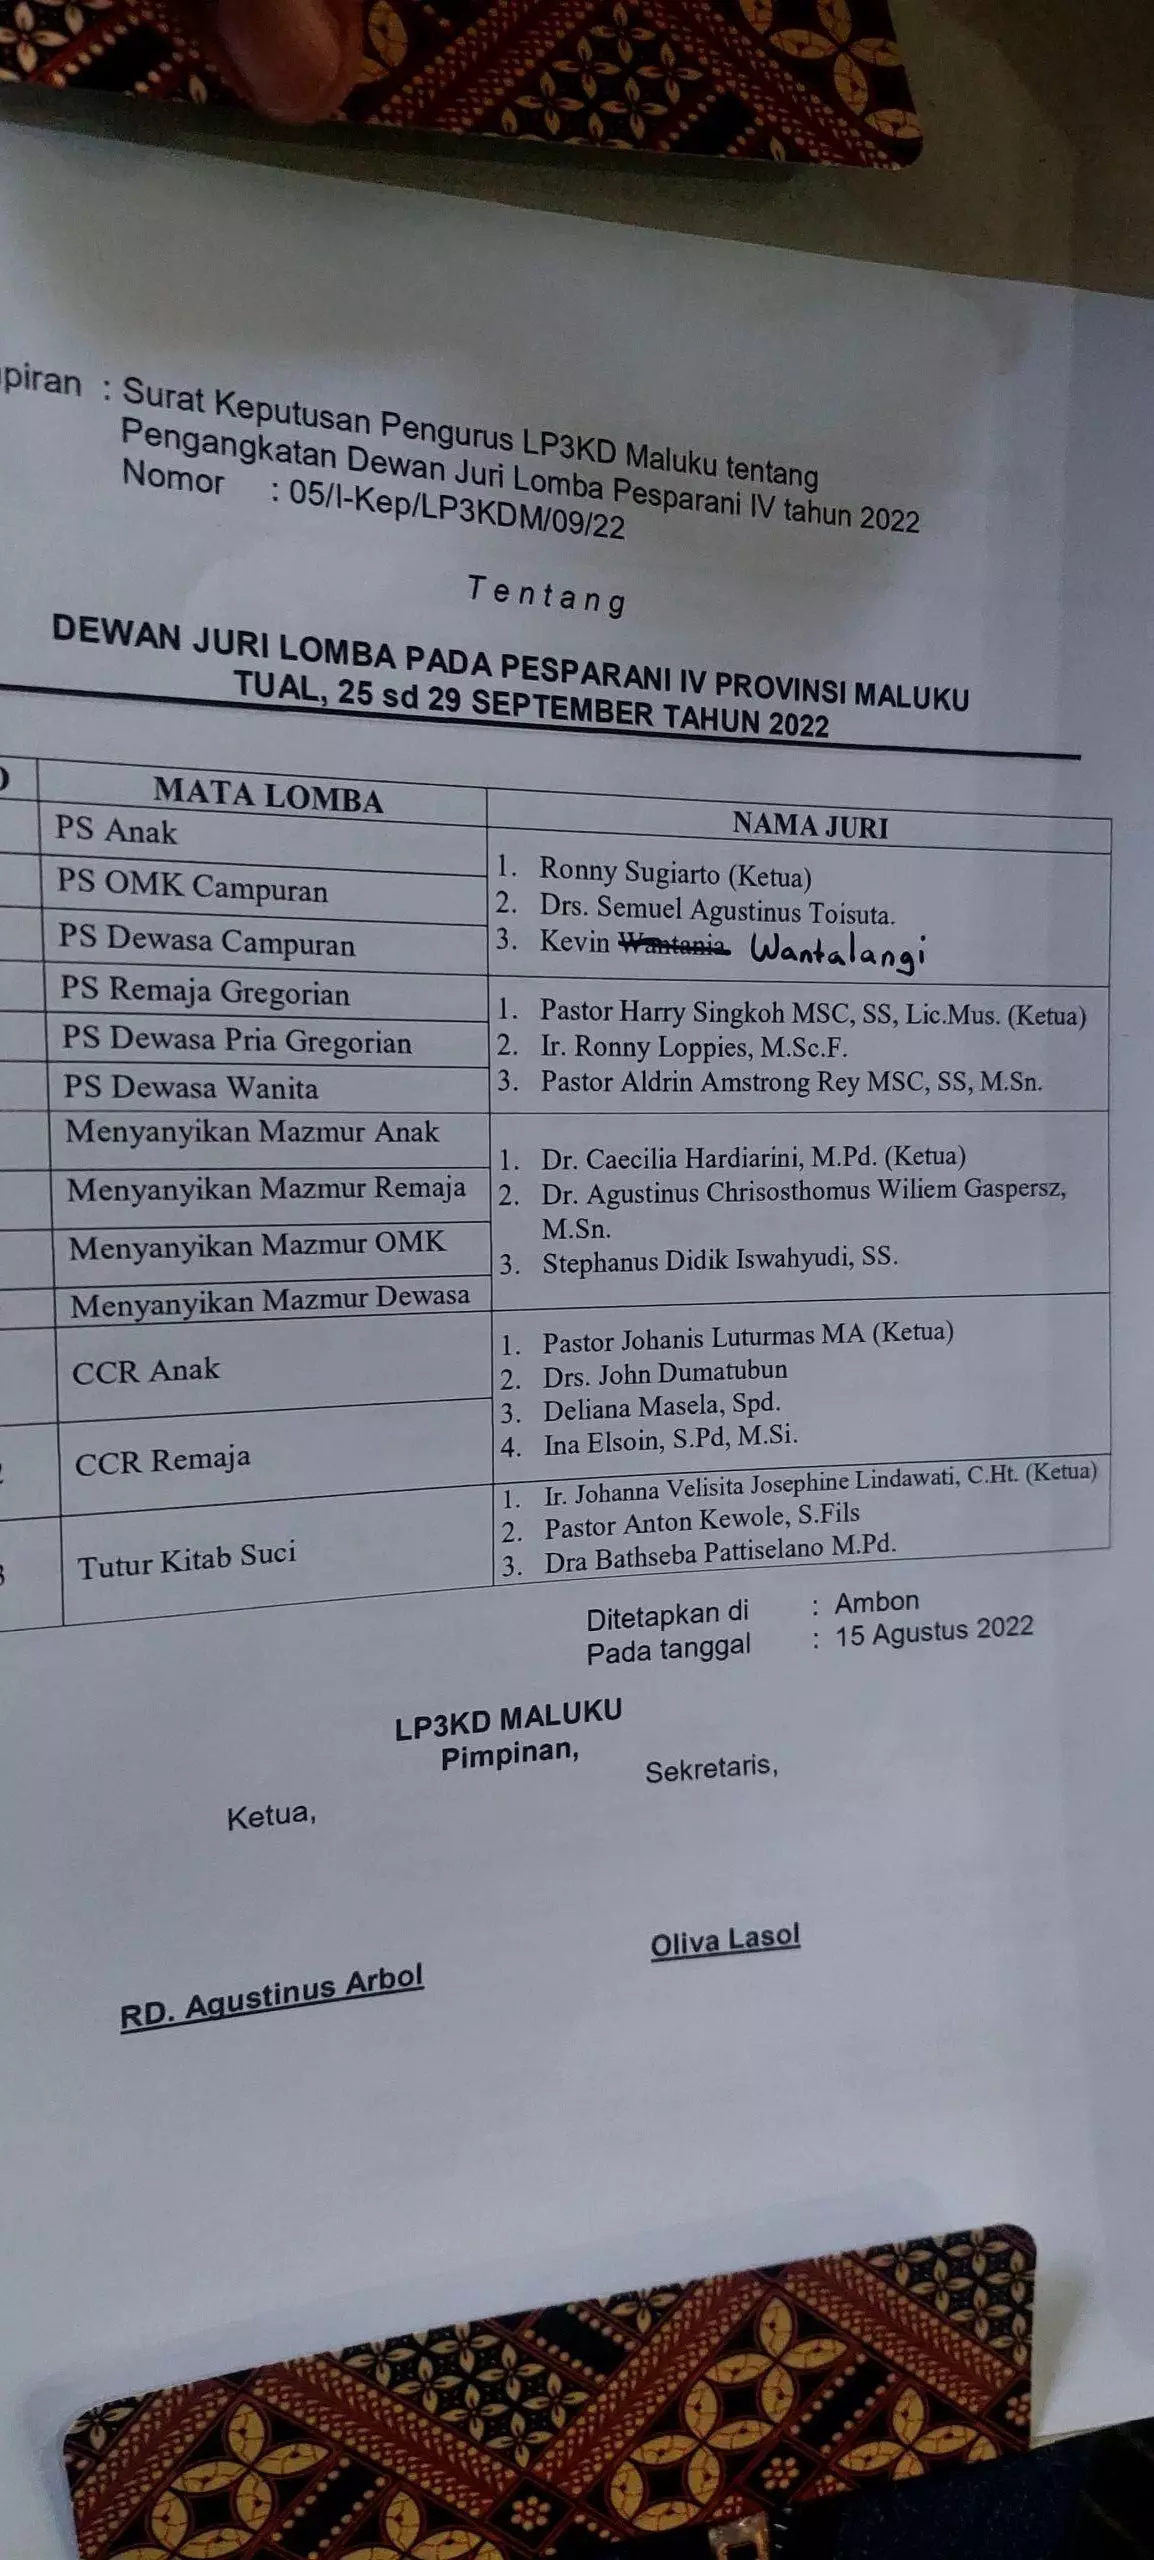 Ini daftar nama dewan juri pesparani katolik iv provinsi maluku di kota tual